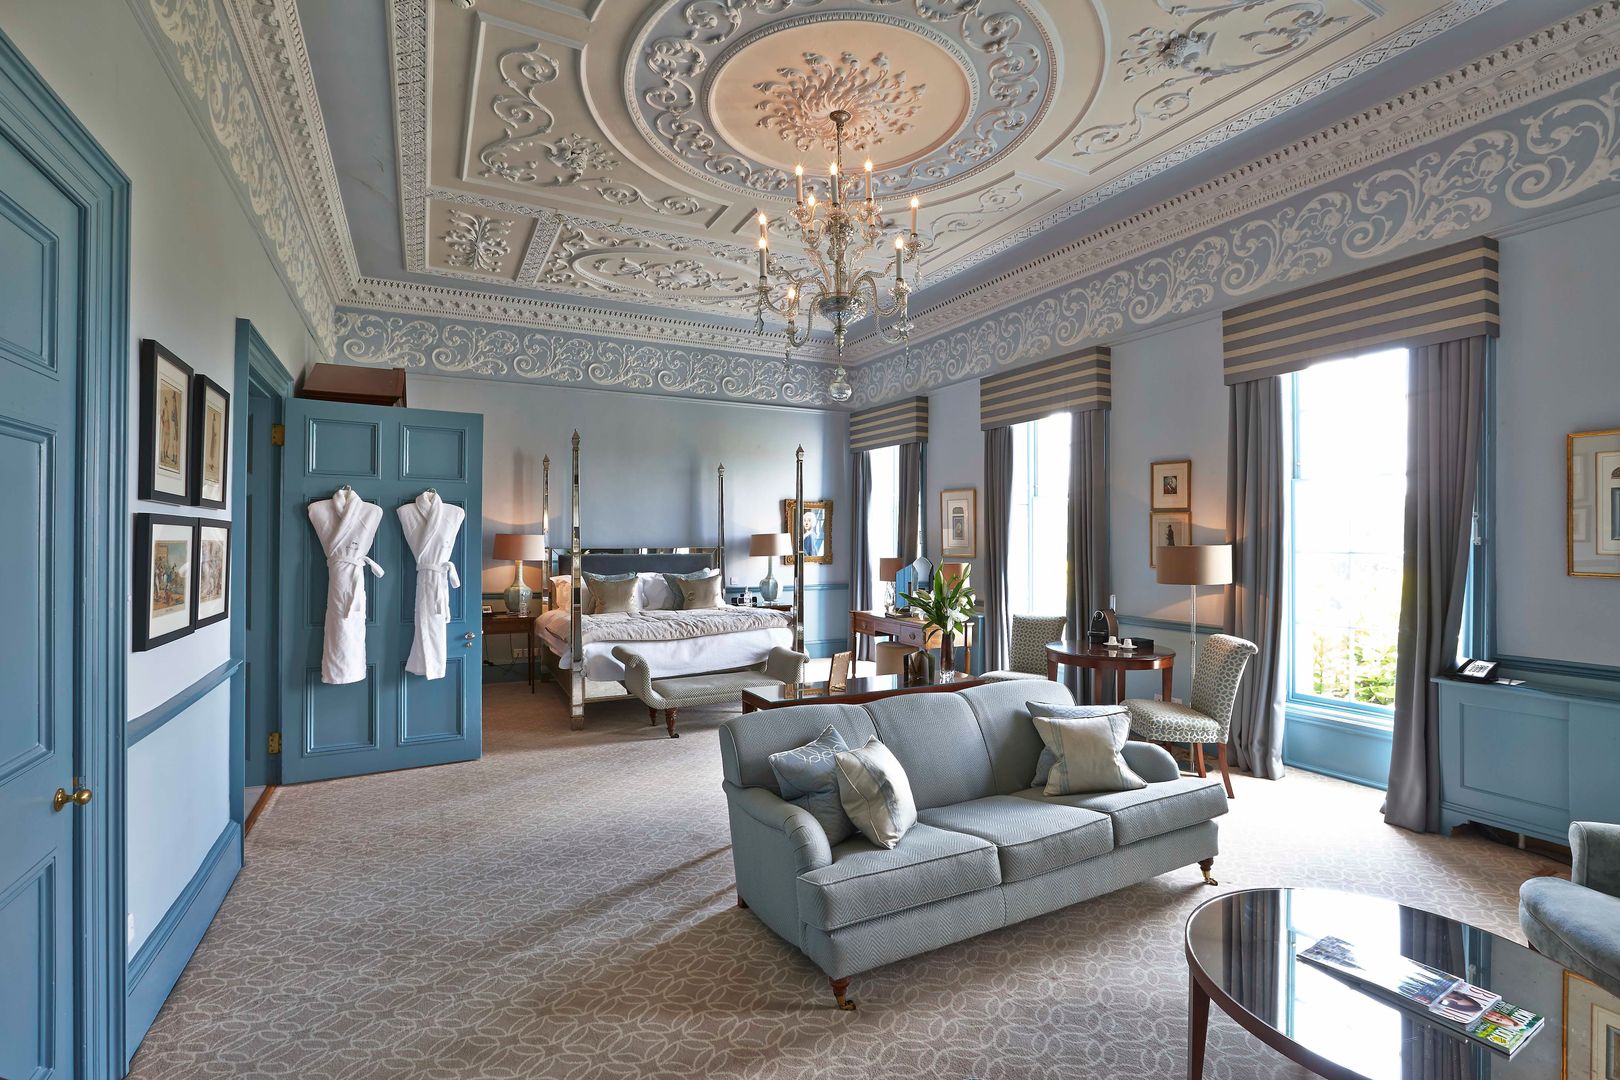 Royal Crescent Hotel, Bath, Wiltshire, England, UK Adam Coupe Photography Limited مساحات تجارية فنادق